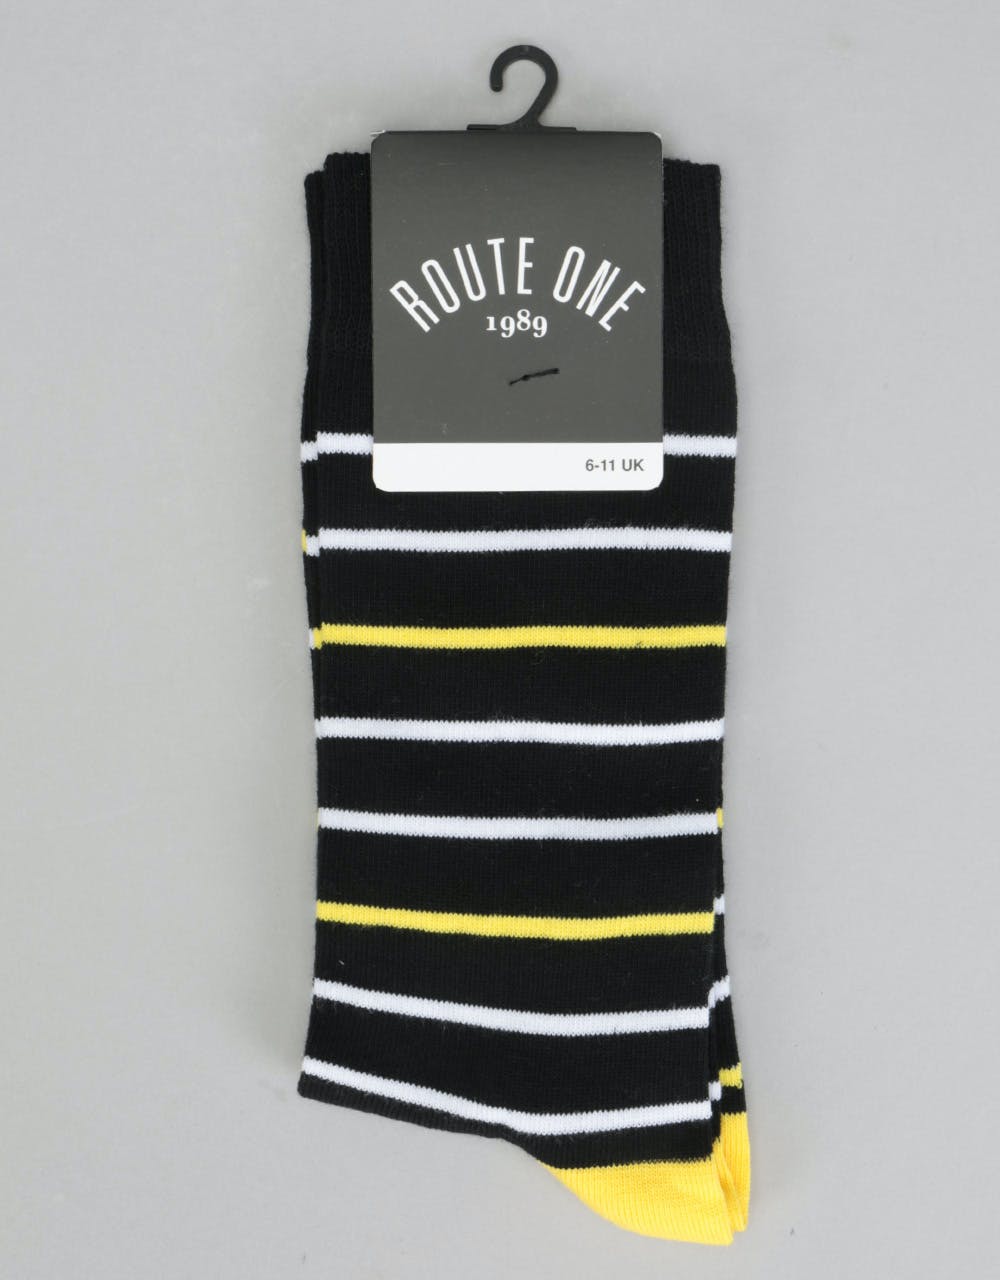 Route One Narrow Stripe Socks - Black/Yellow